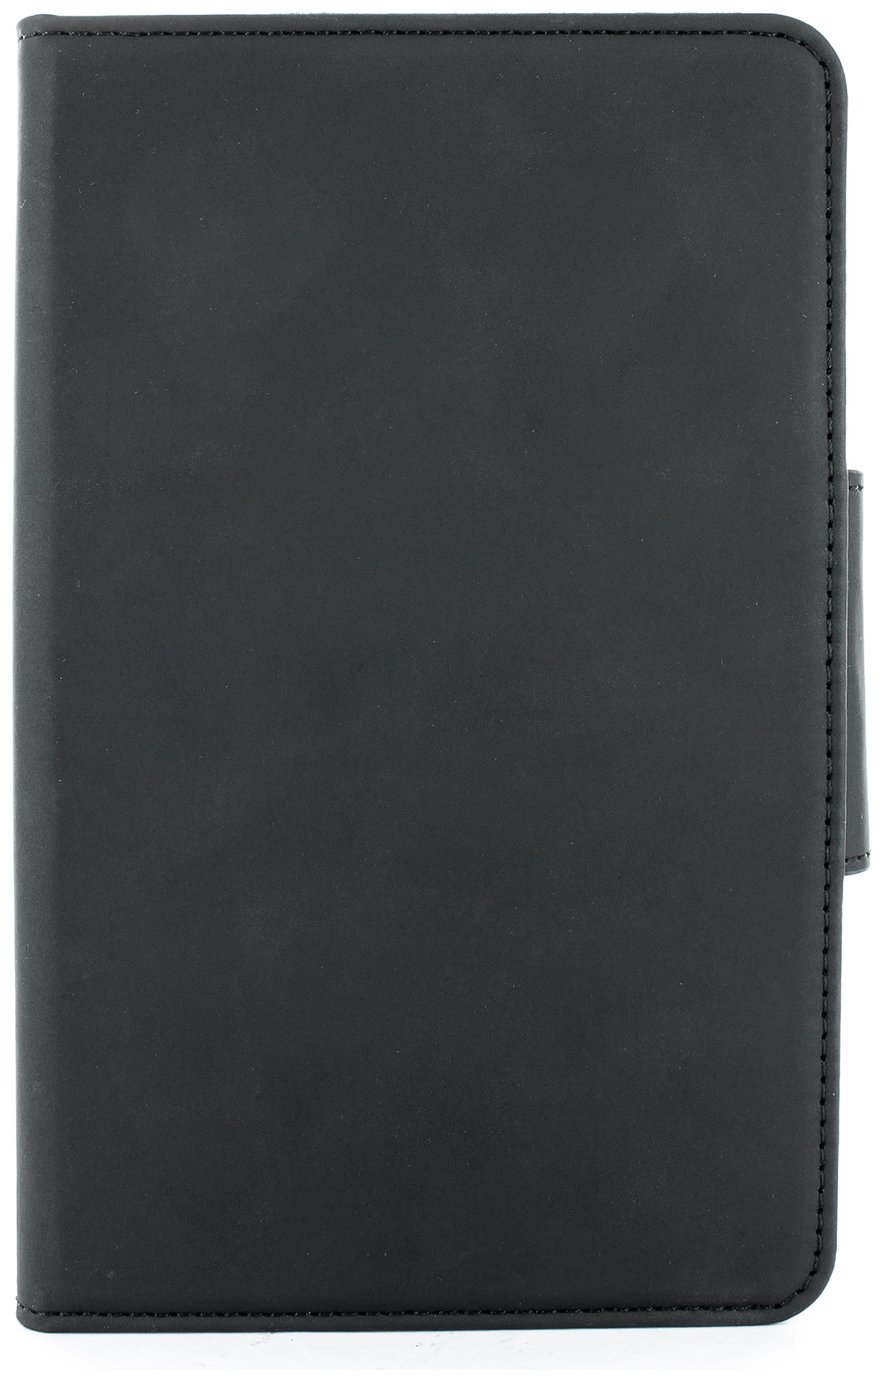 Proporta Samsung Tab A 10.1 Inch 2018 Tablet Case – Black